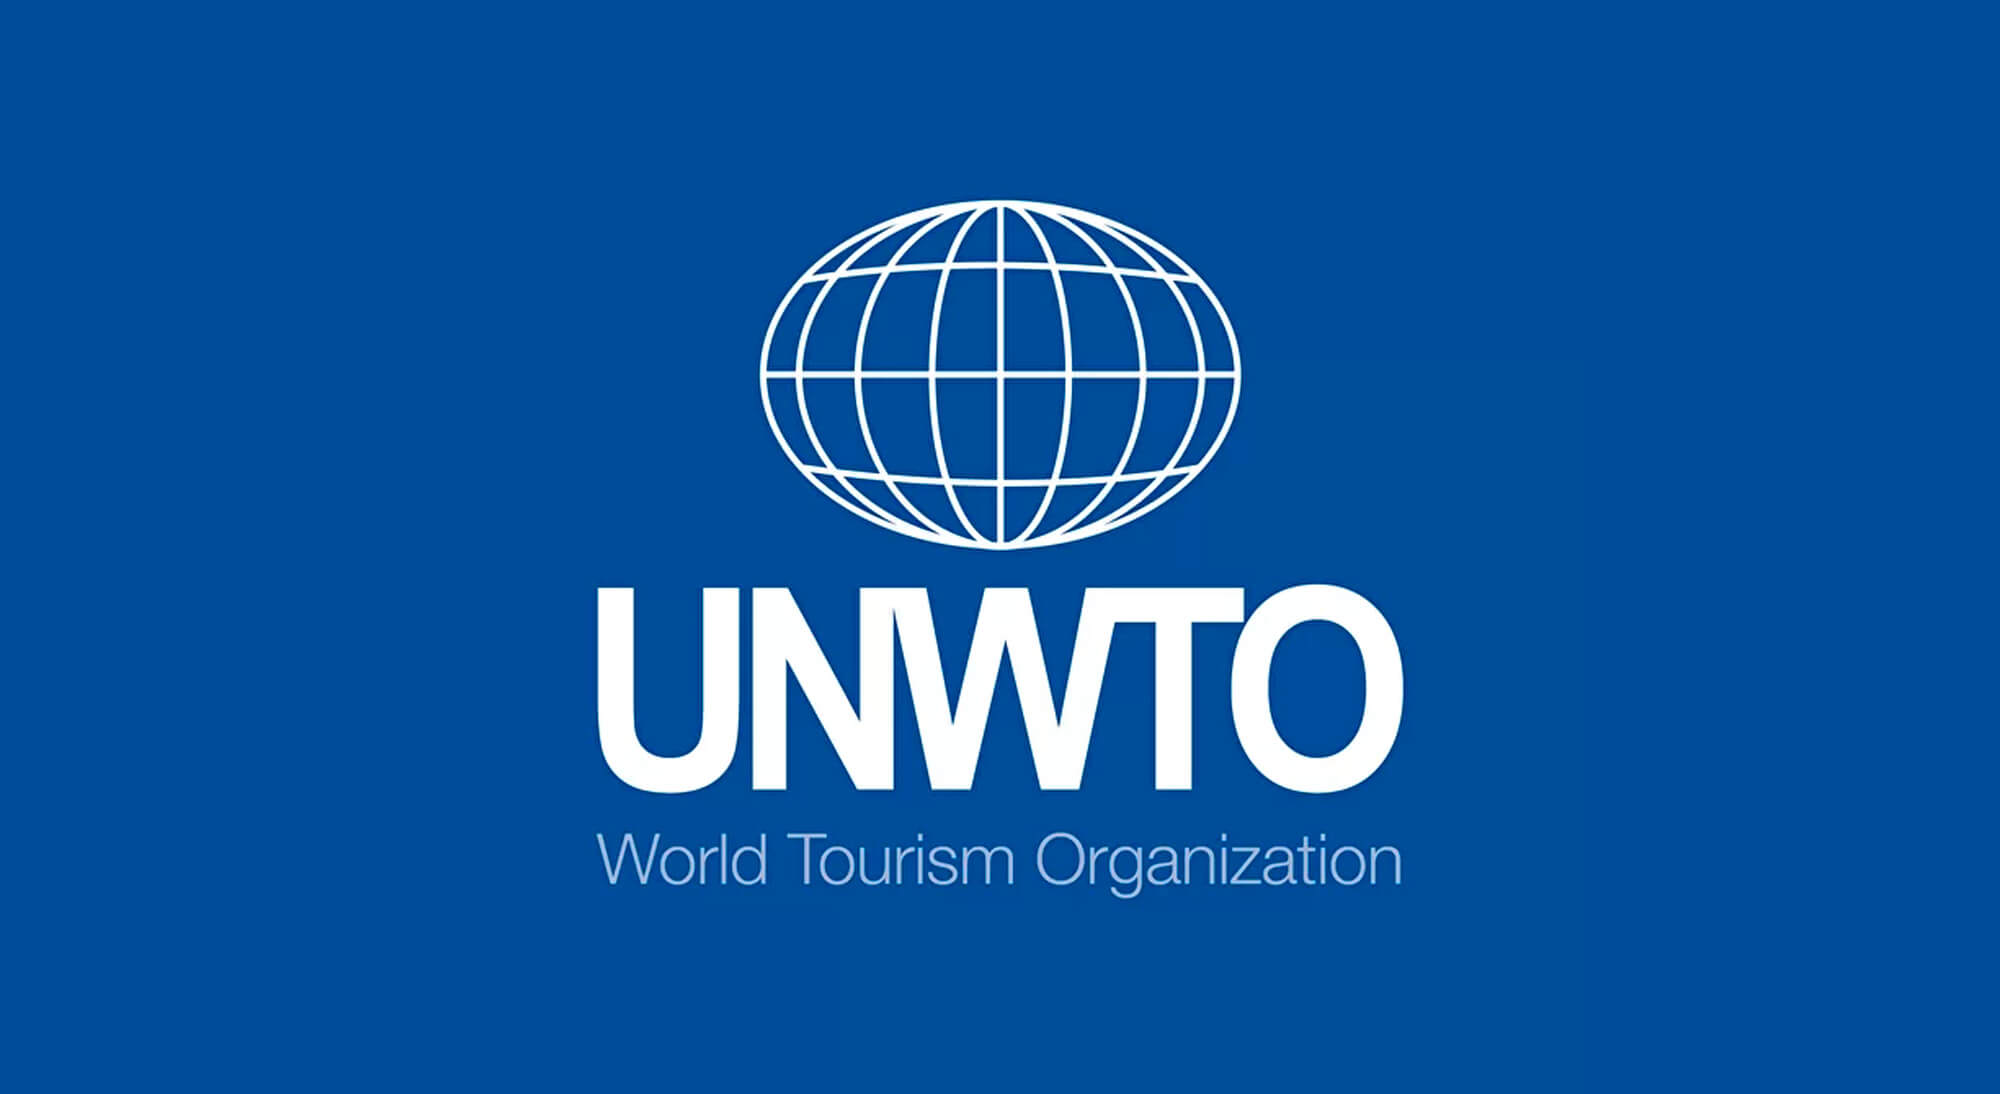 World Tourism Organization (UNWTO) Logo